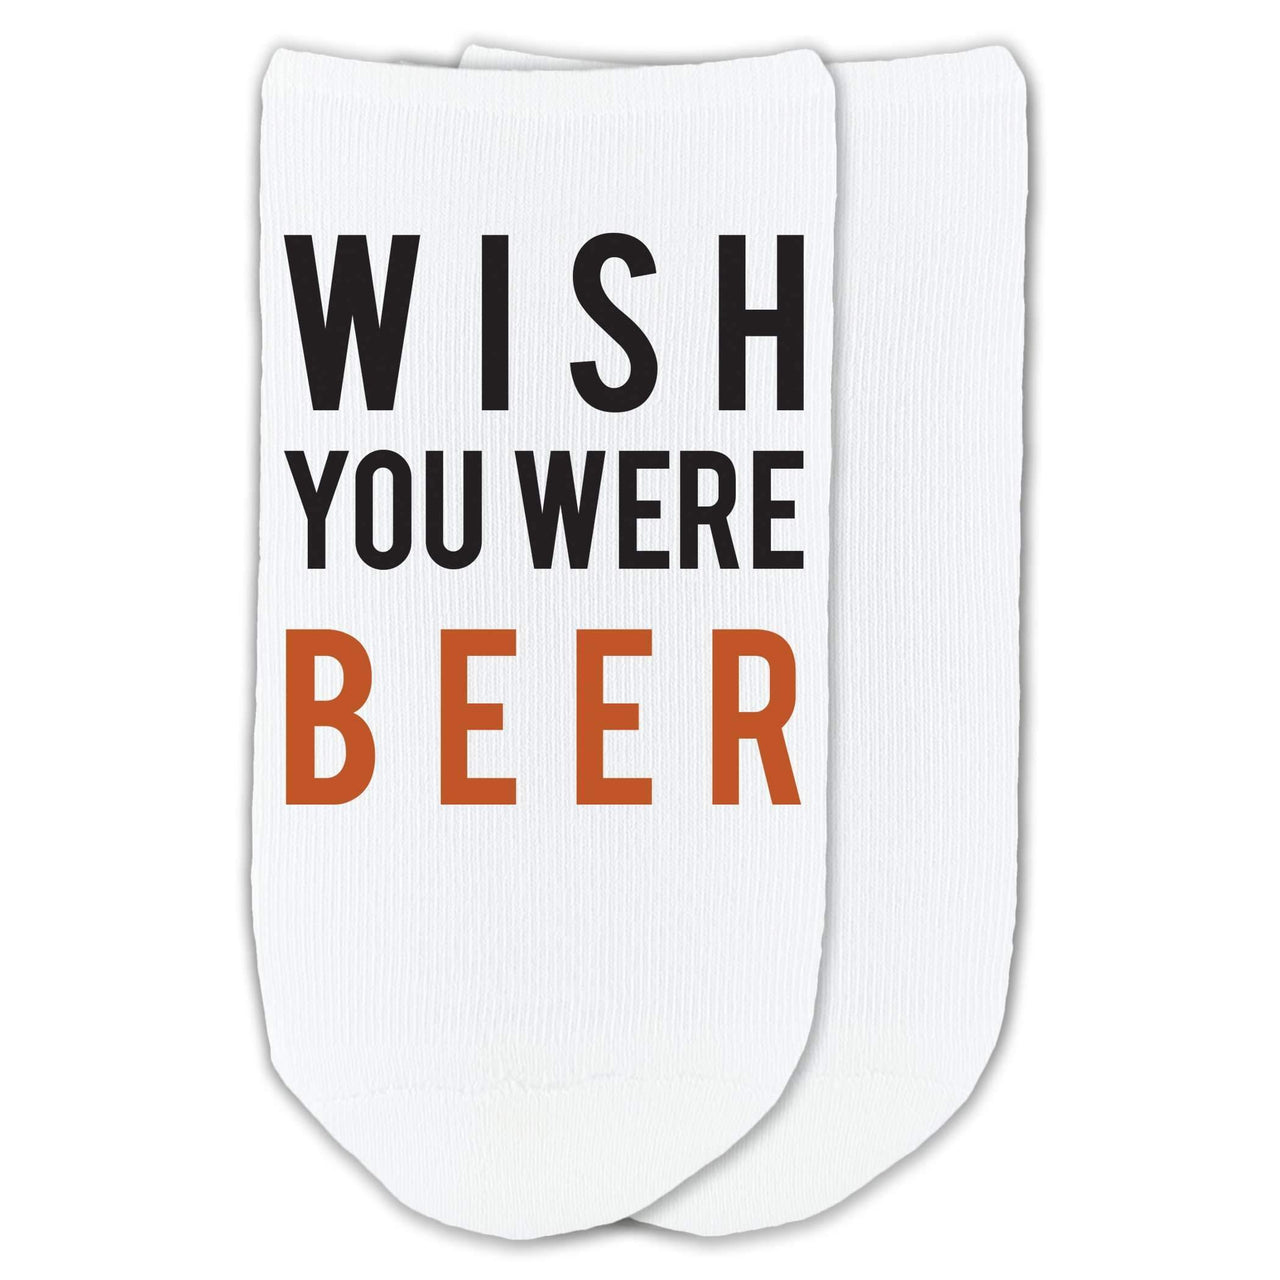 Wish you were beer custom printed on no show socks.